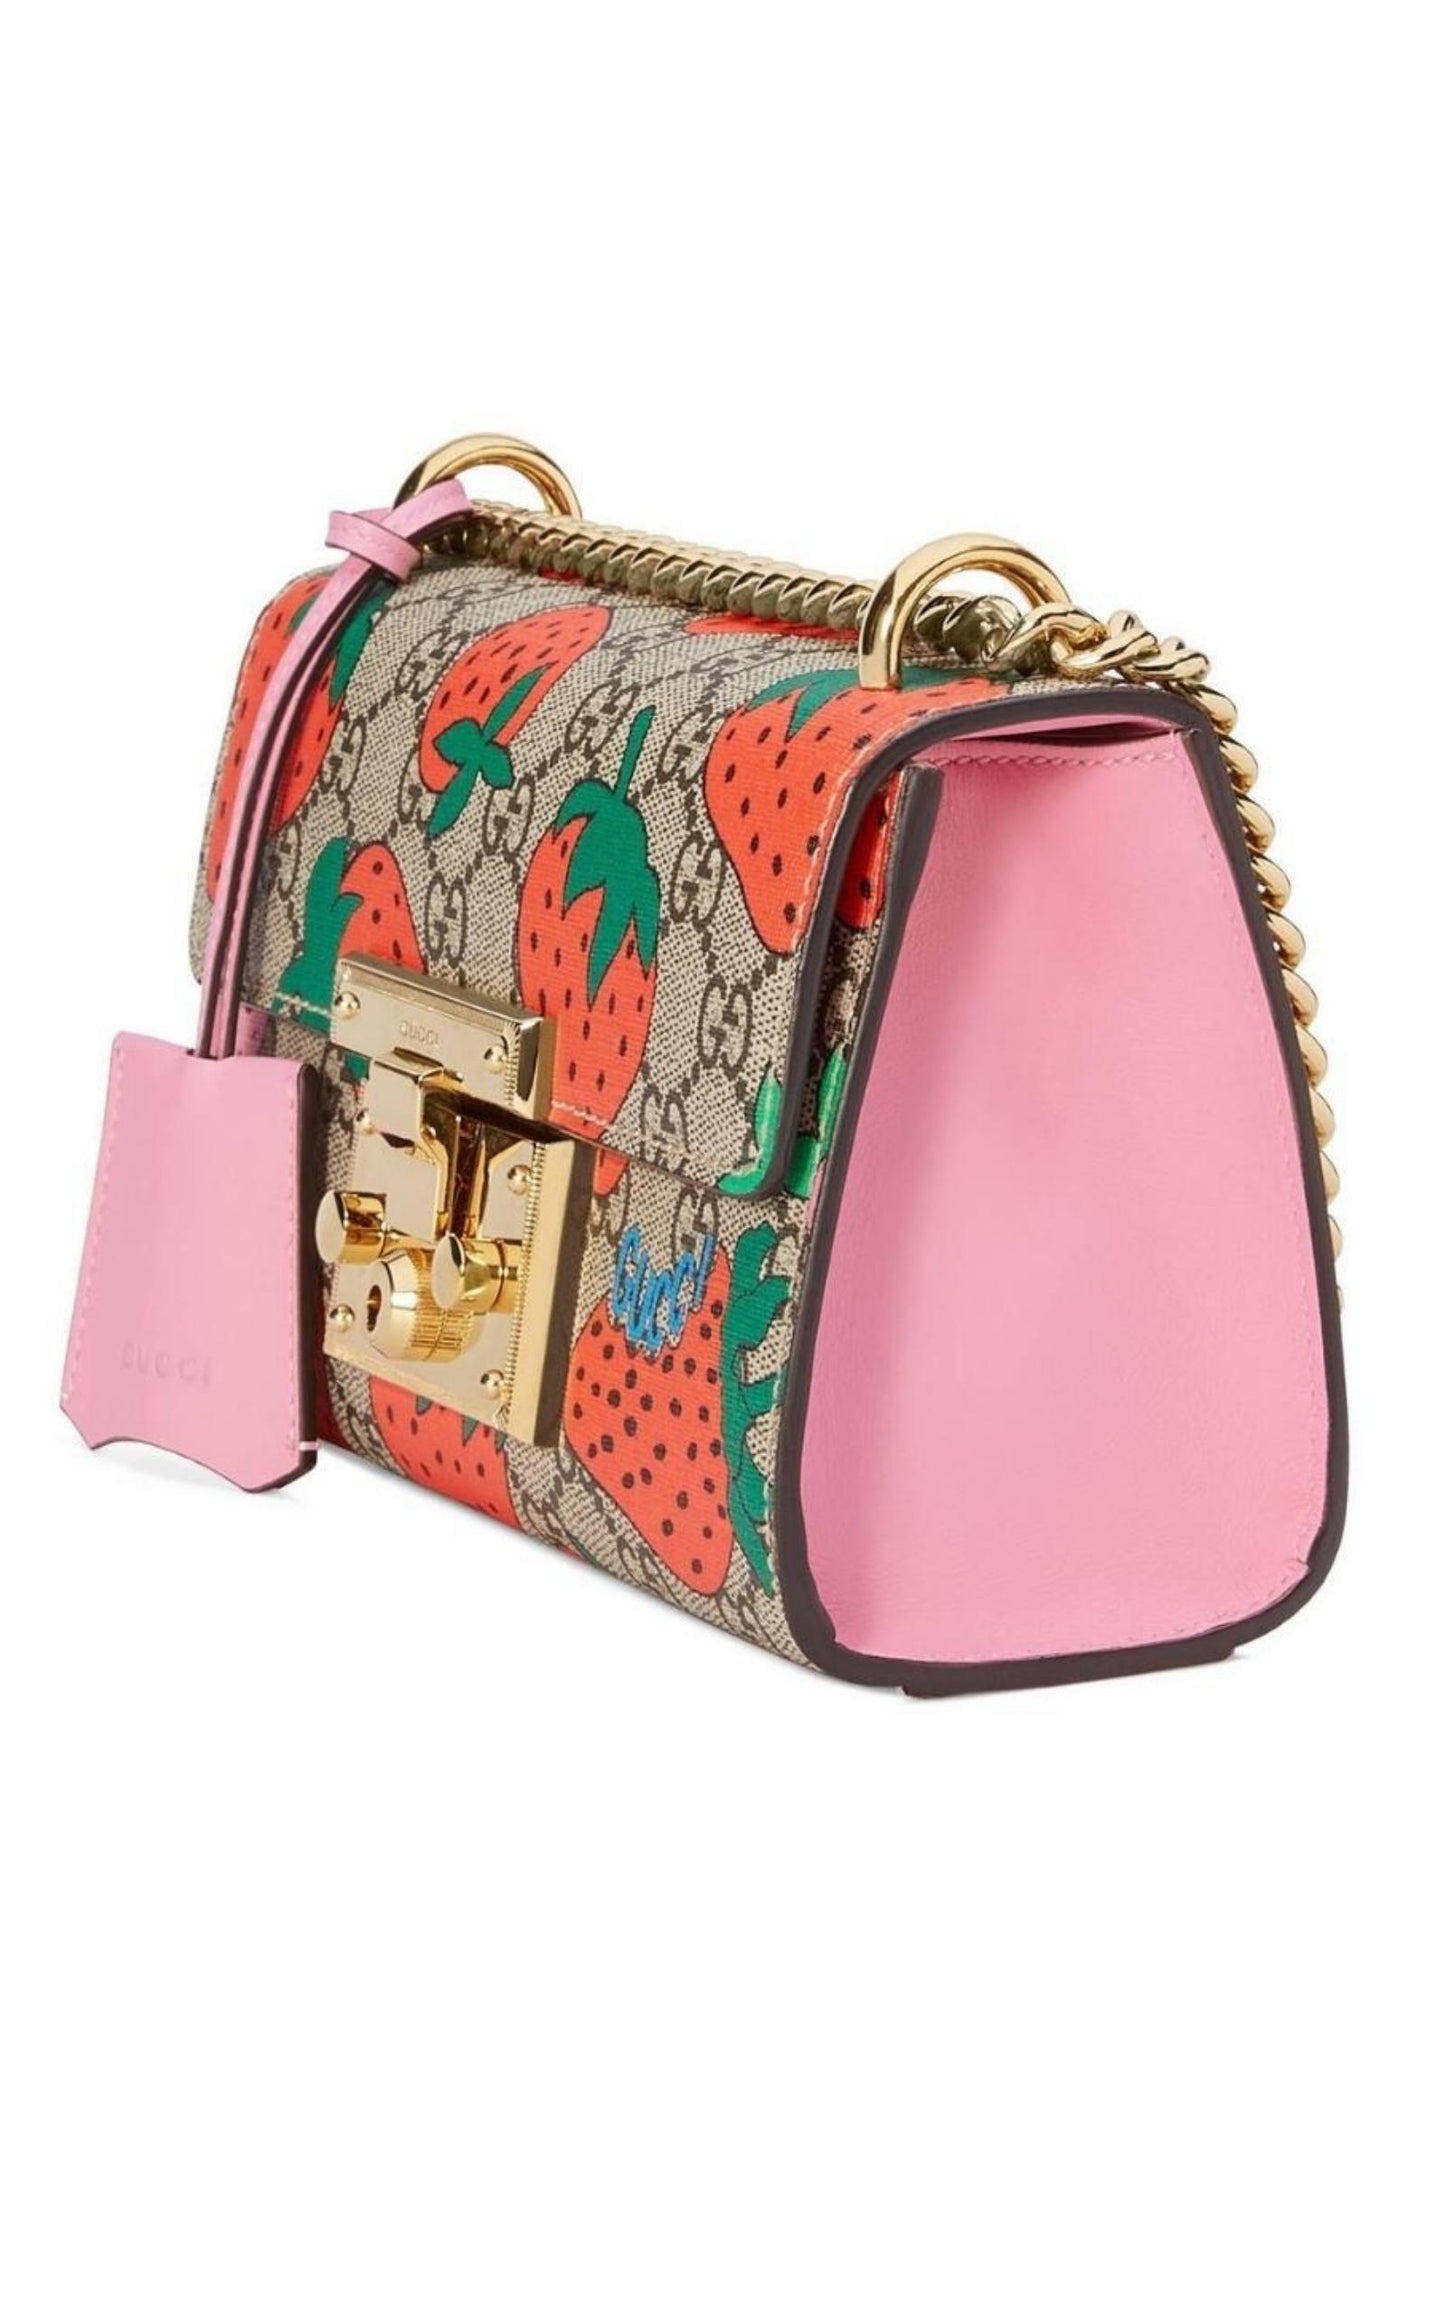 Padlock Gg Strawberry Small Shoulder Bag – ZAK BAGS ©️